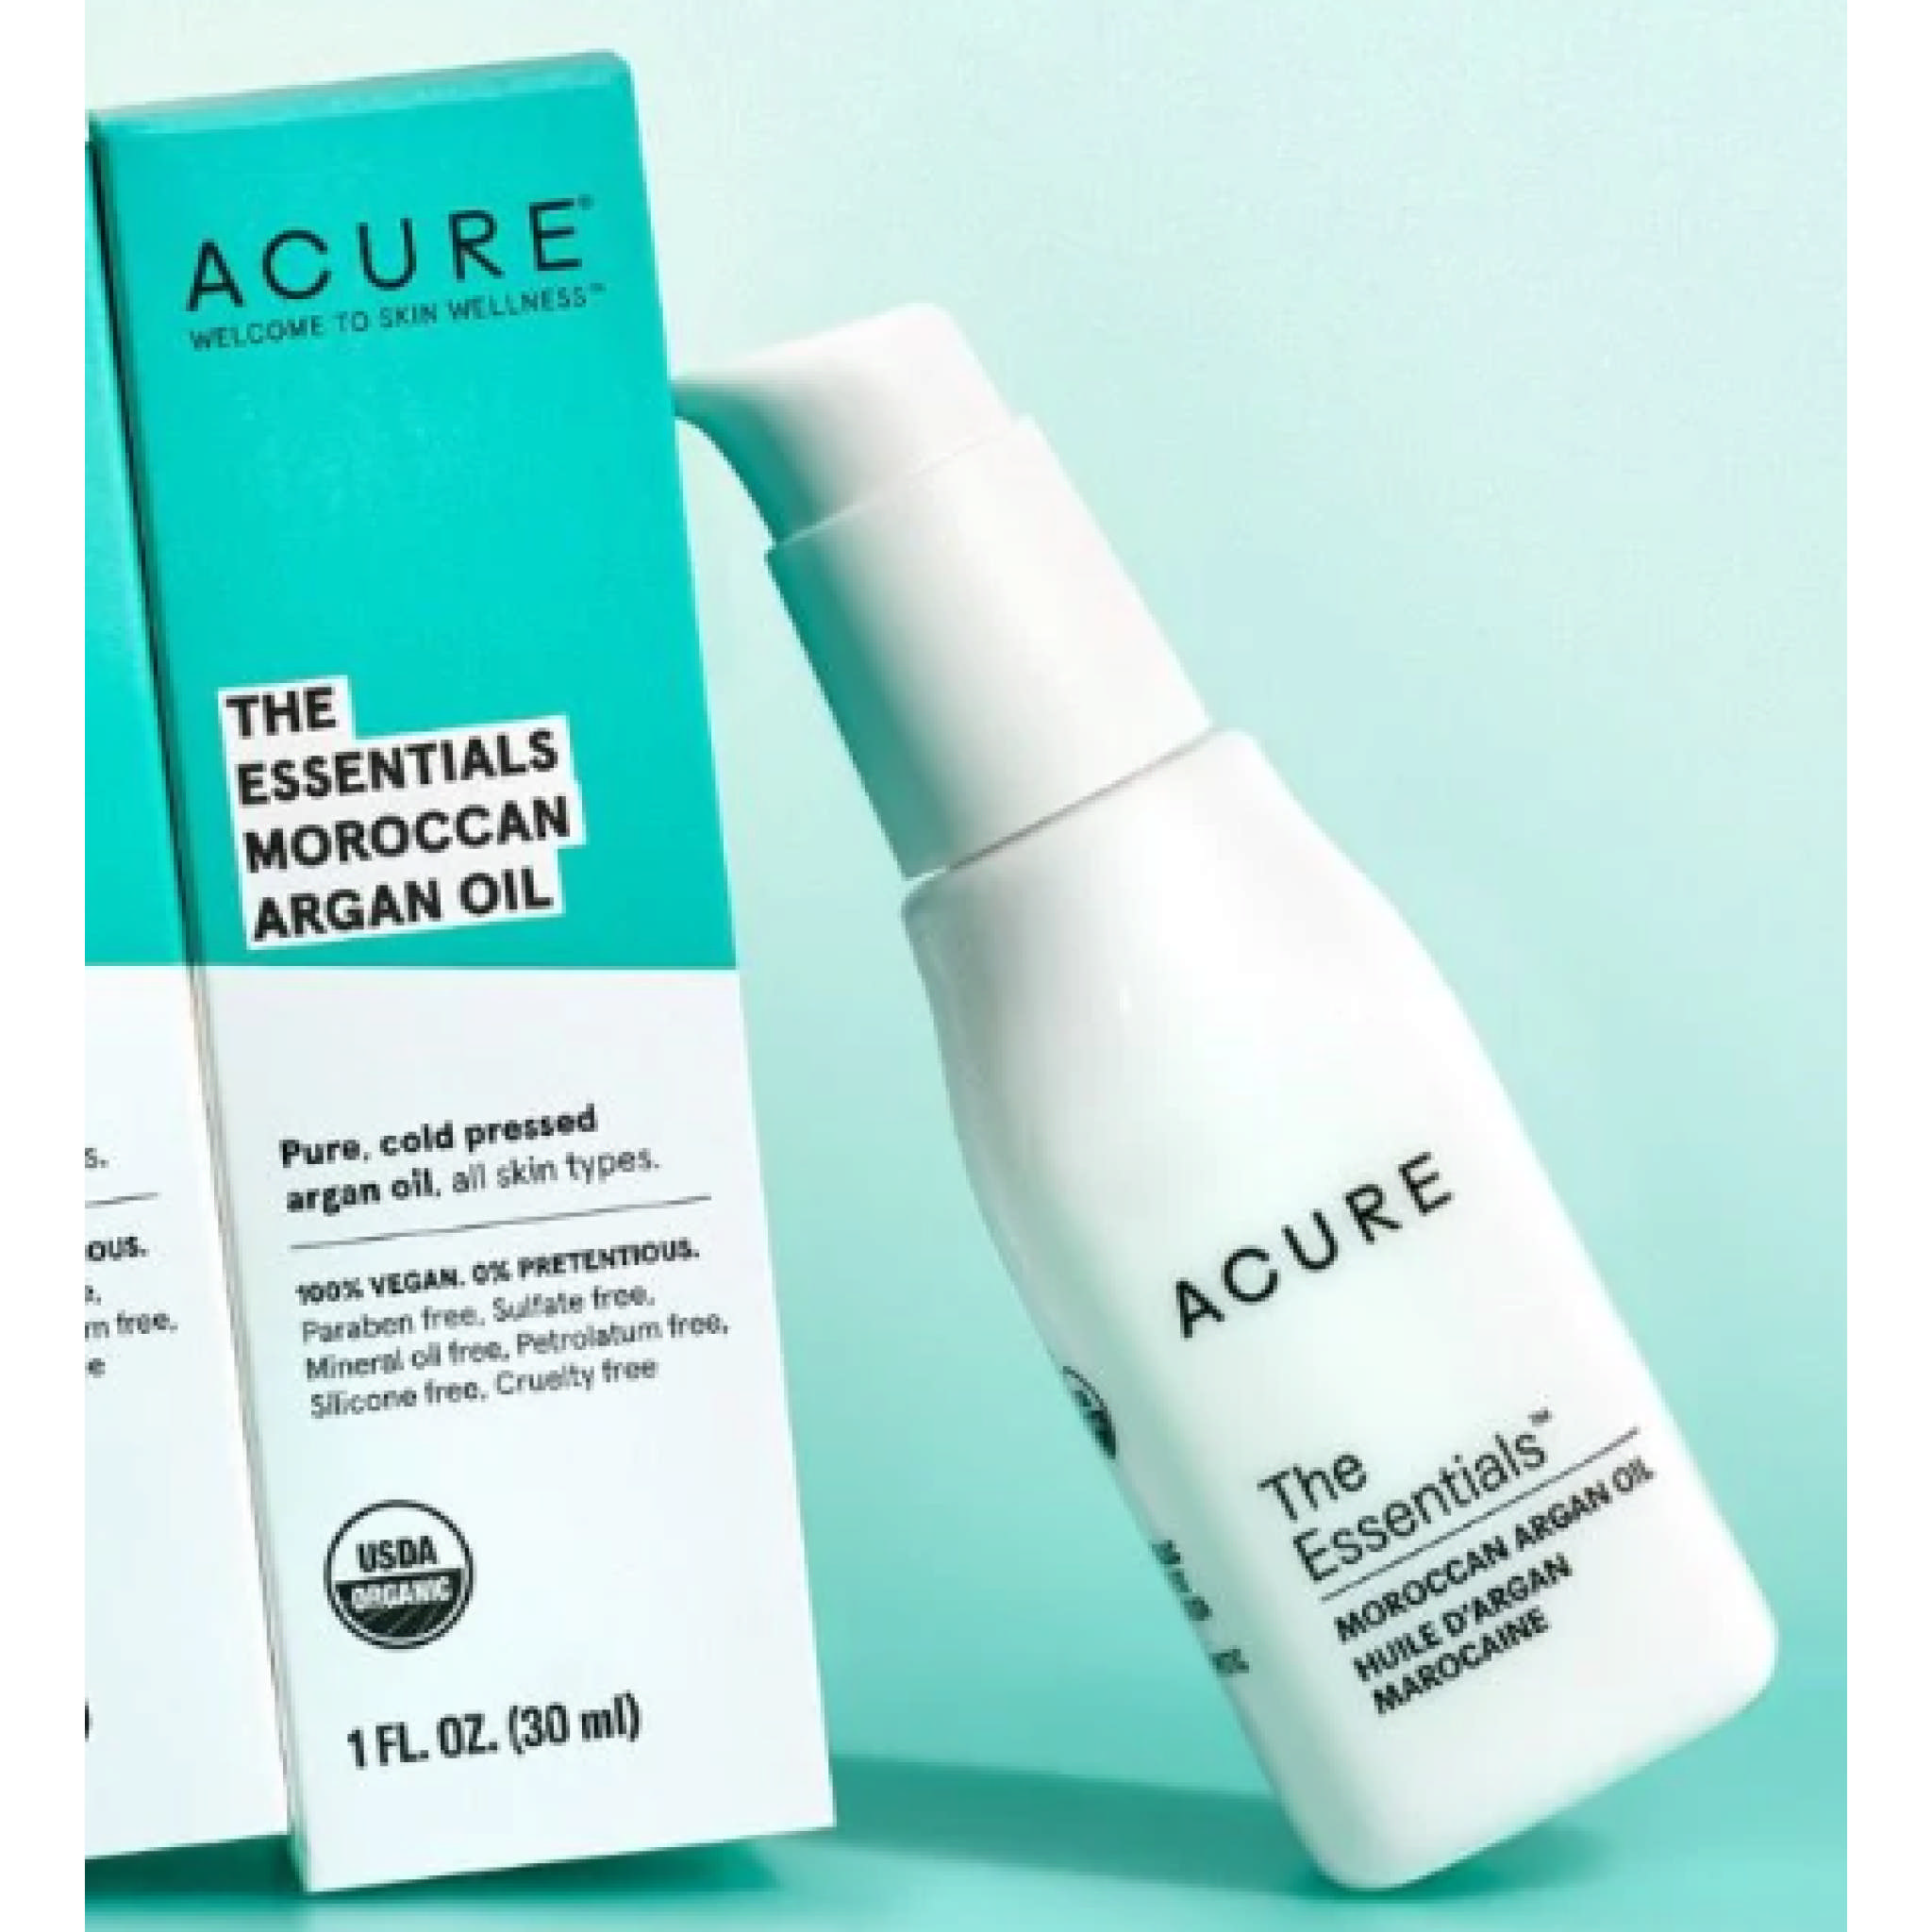 Acure Organics - Argan Oil Moroccan 100% Org